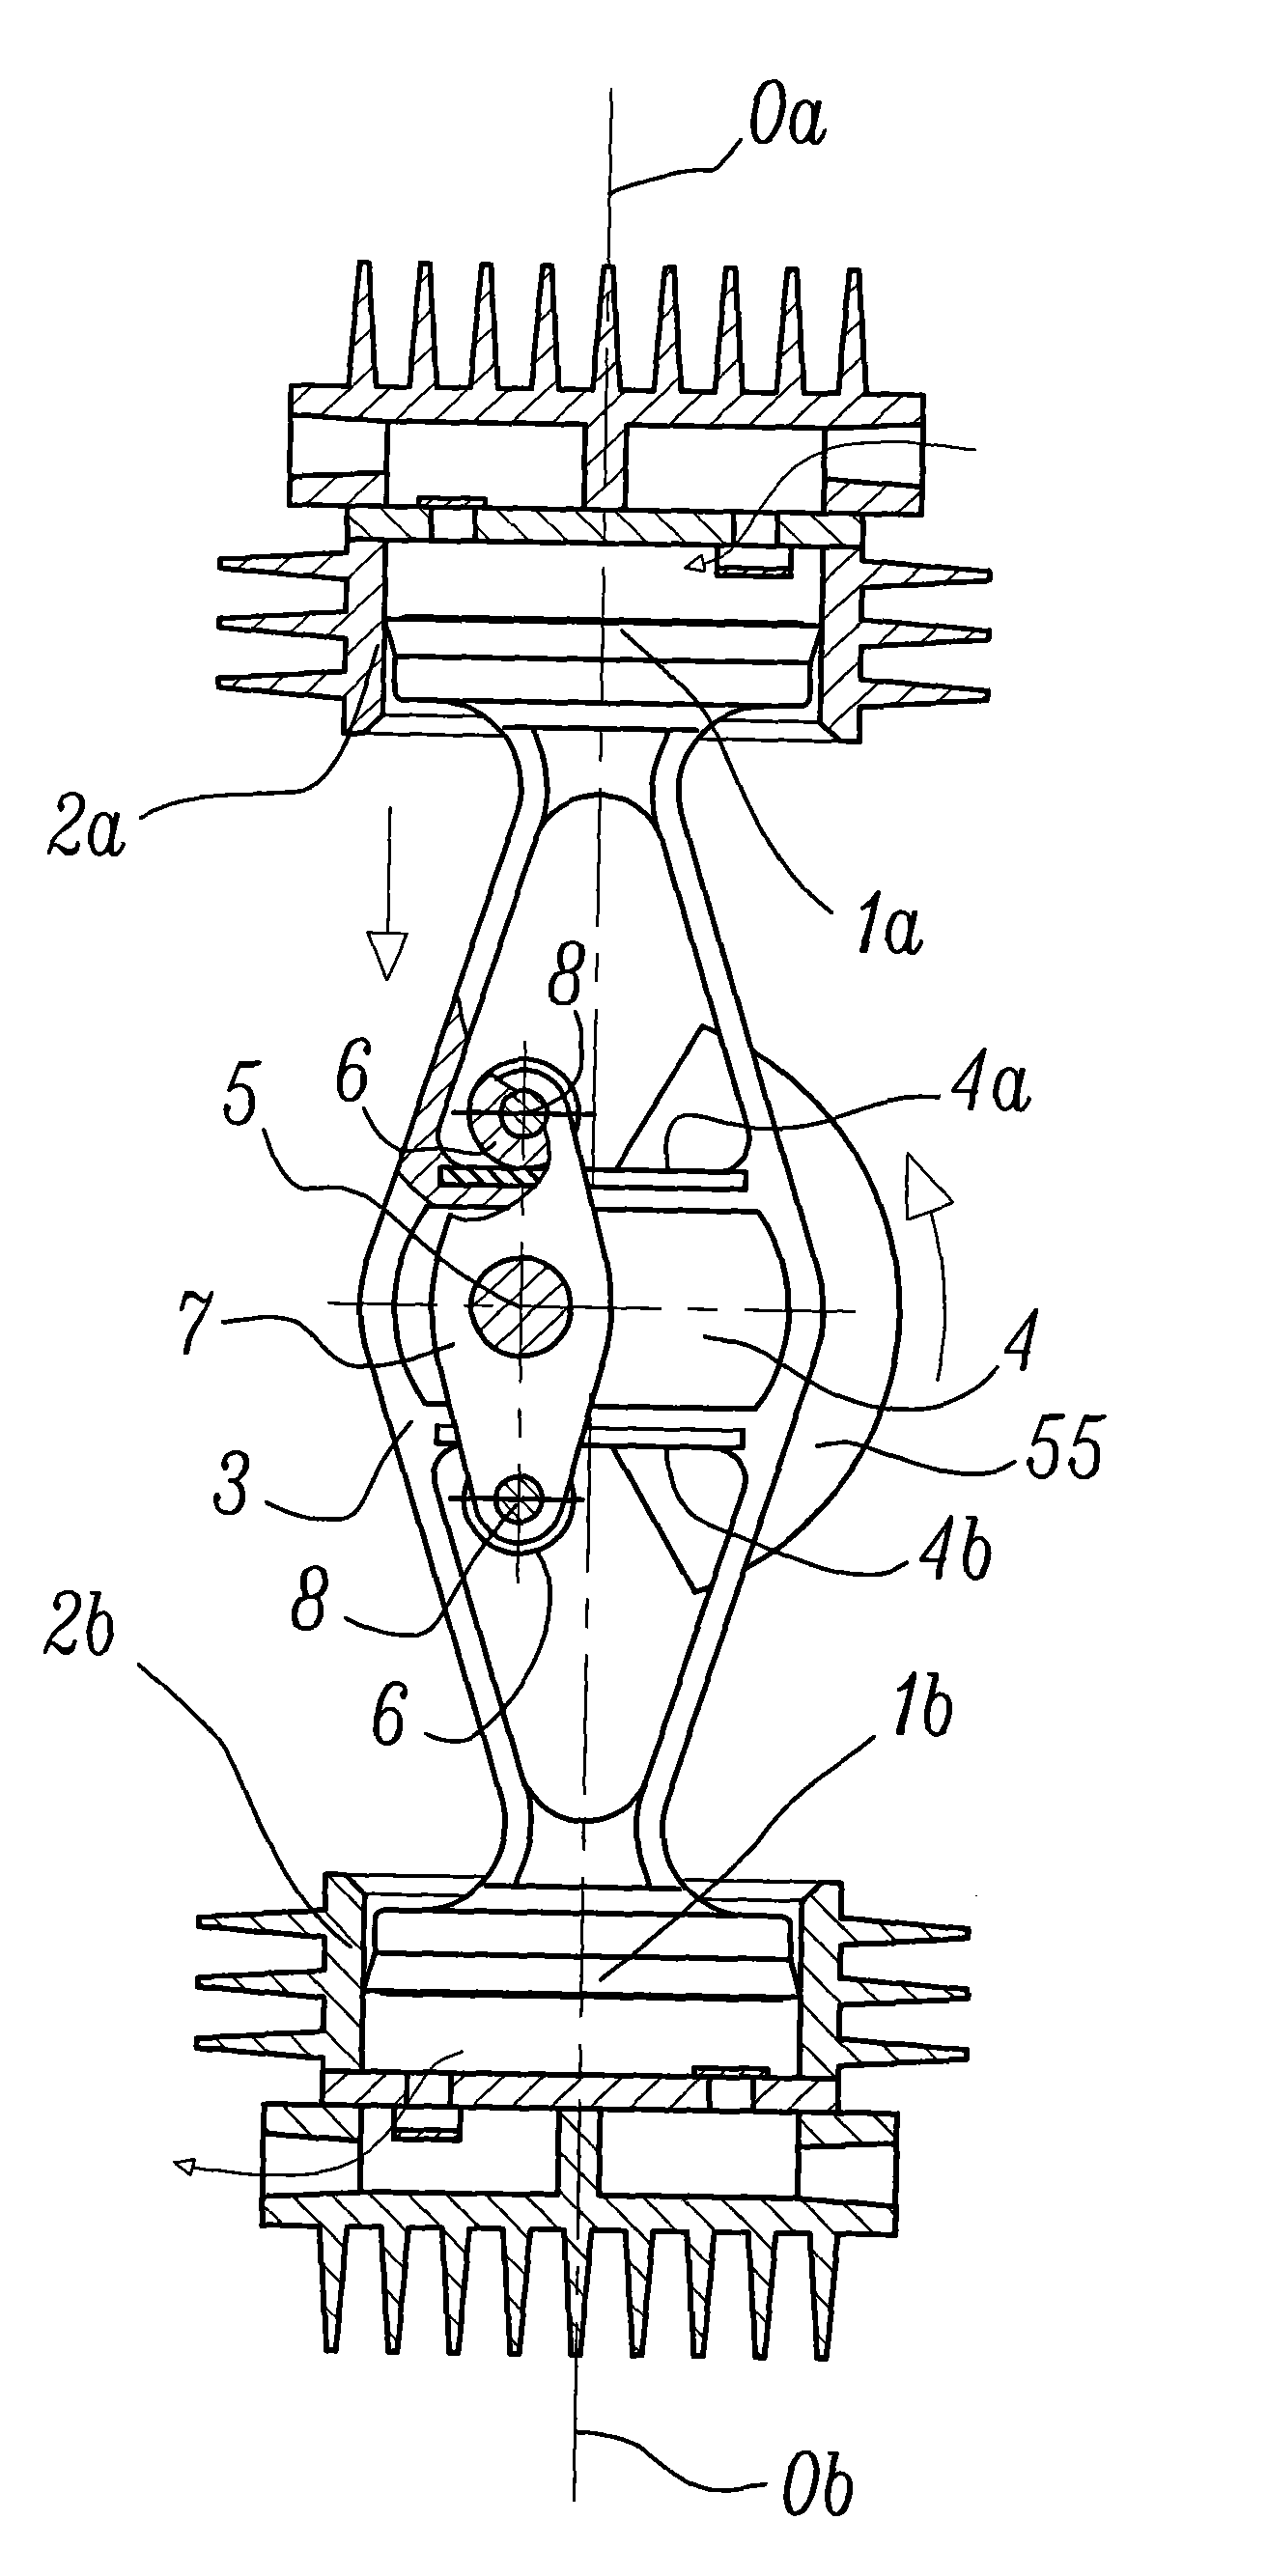 Linearly-reciprocating piston compressor